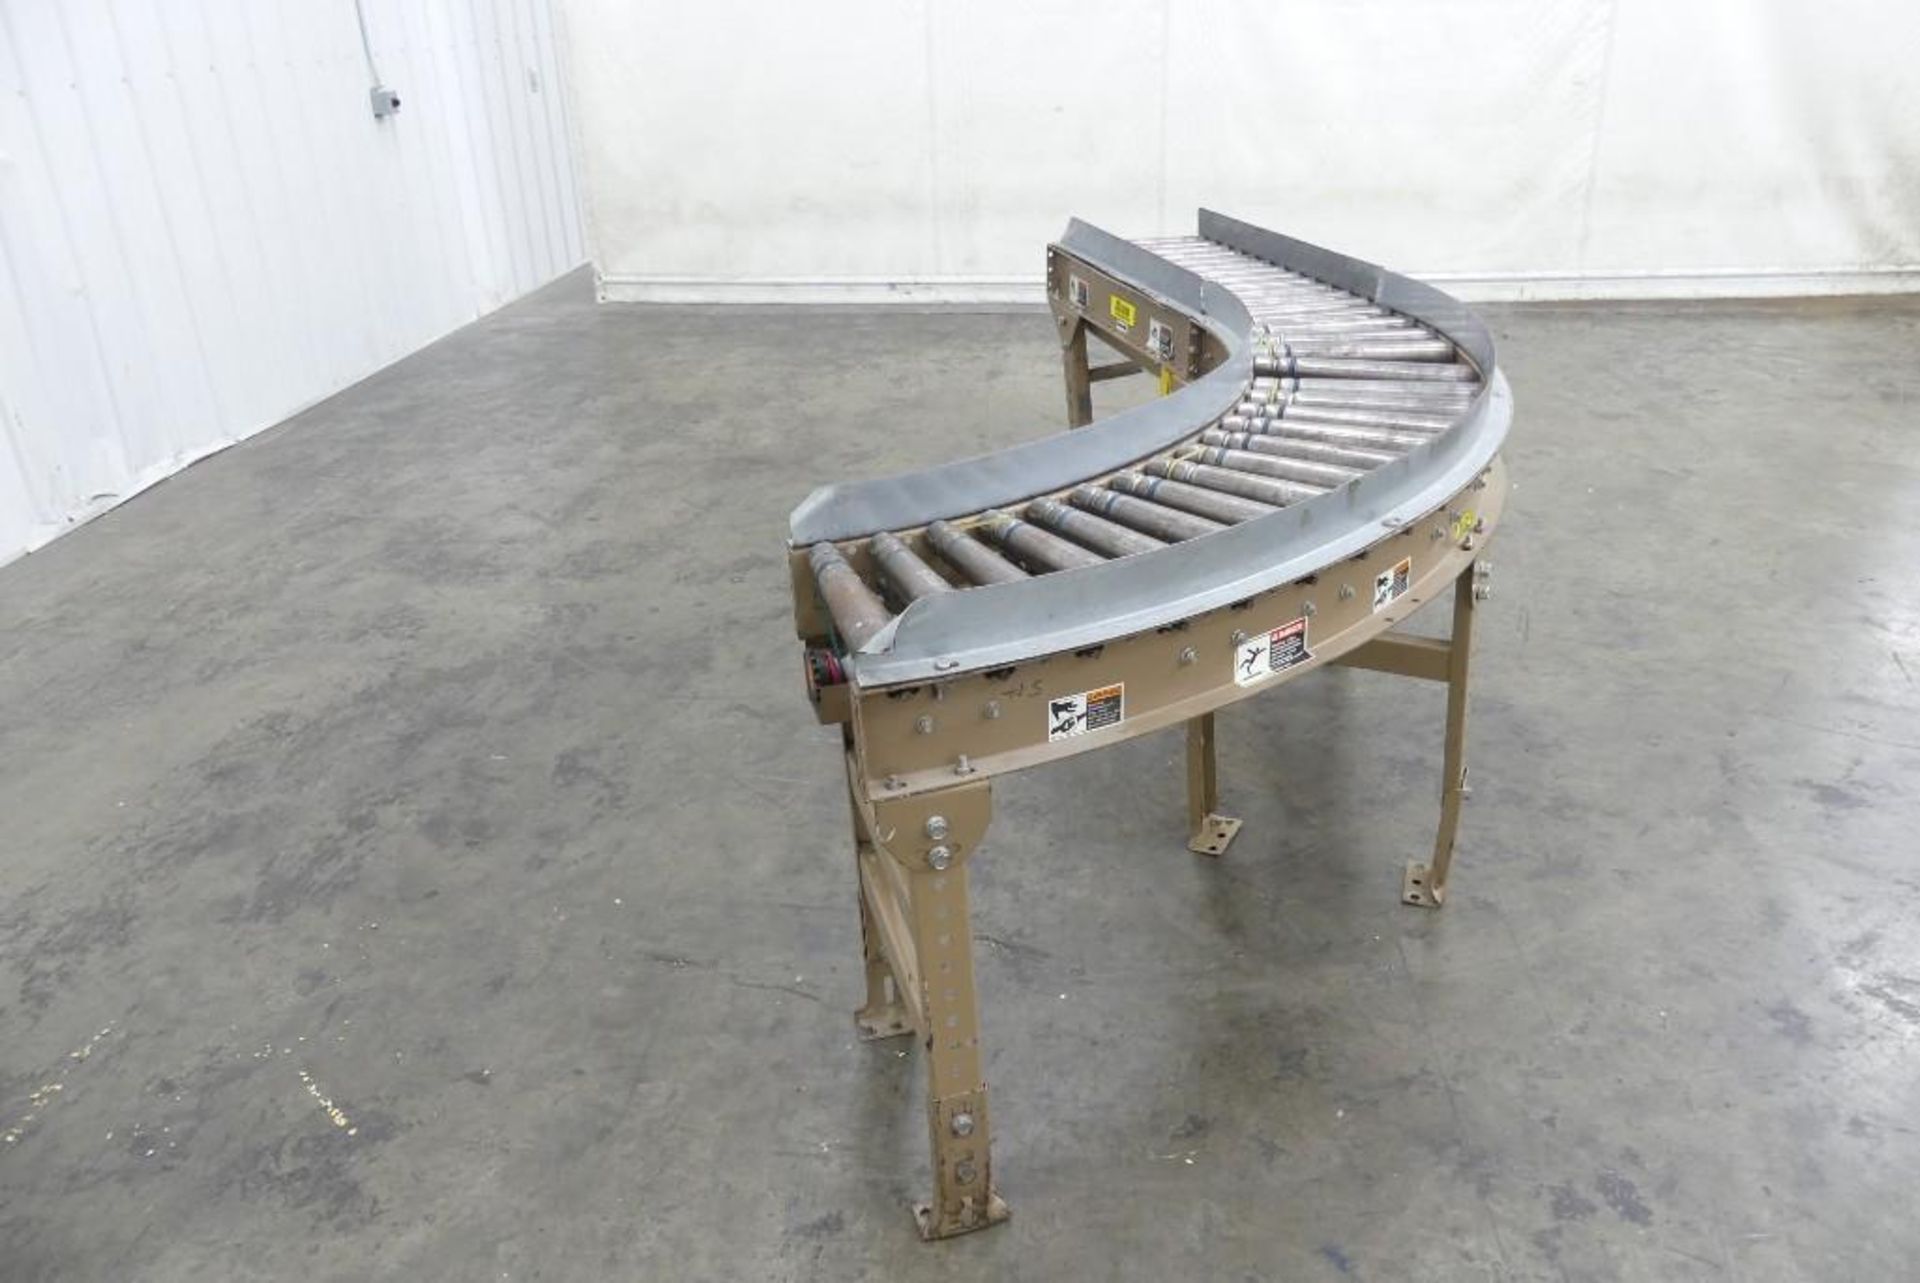 90 Degree Turn Lineshaft Roller Conveyor 15" Wide - Image 2 of 7